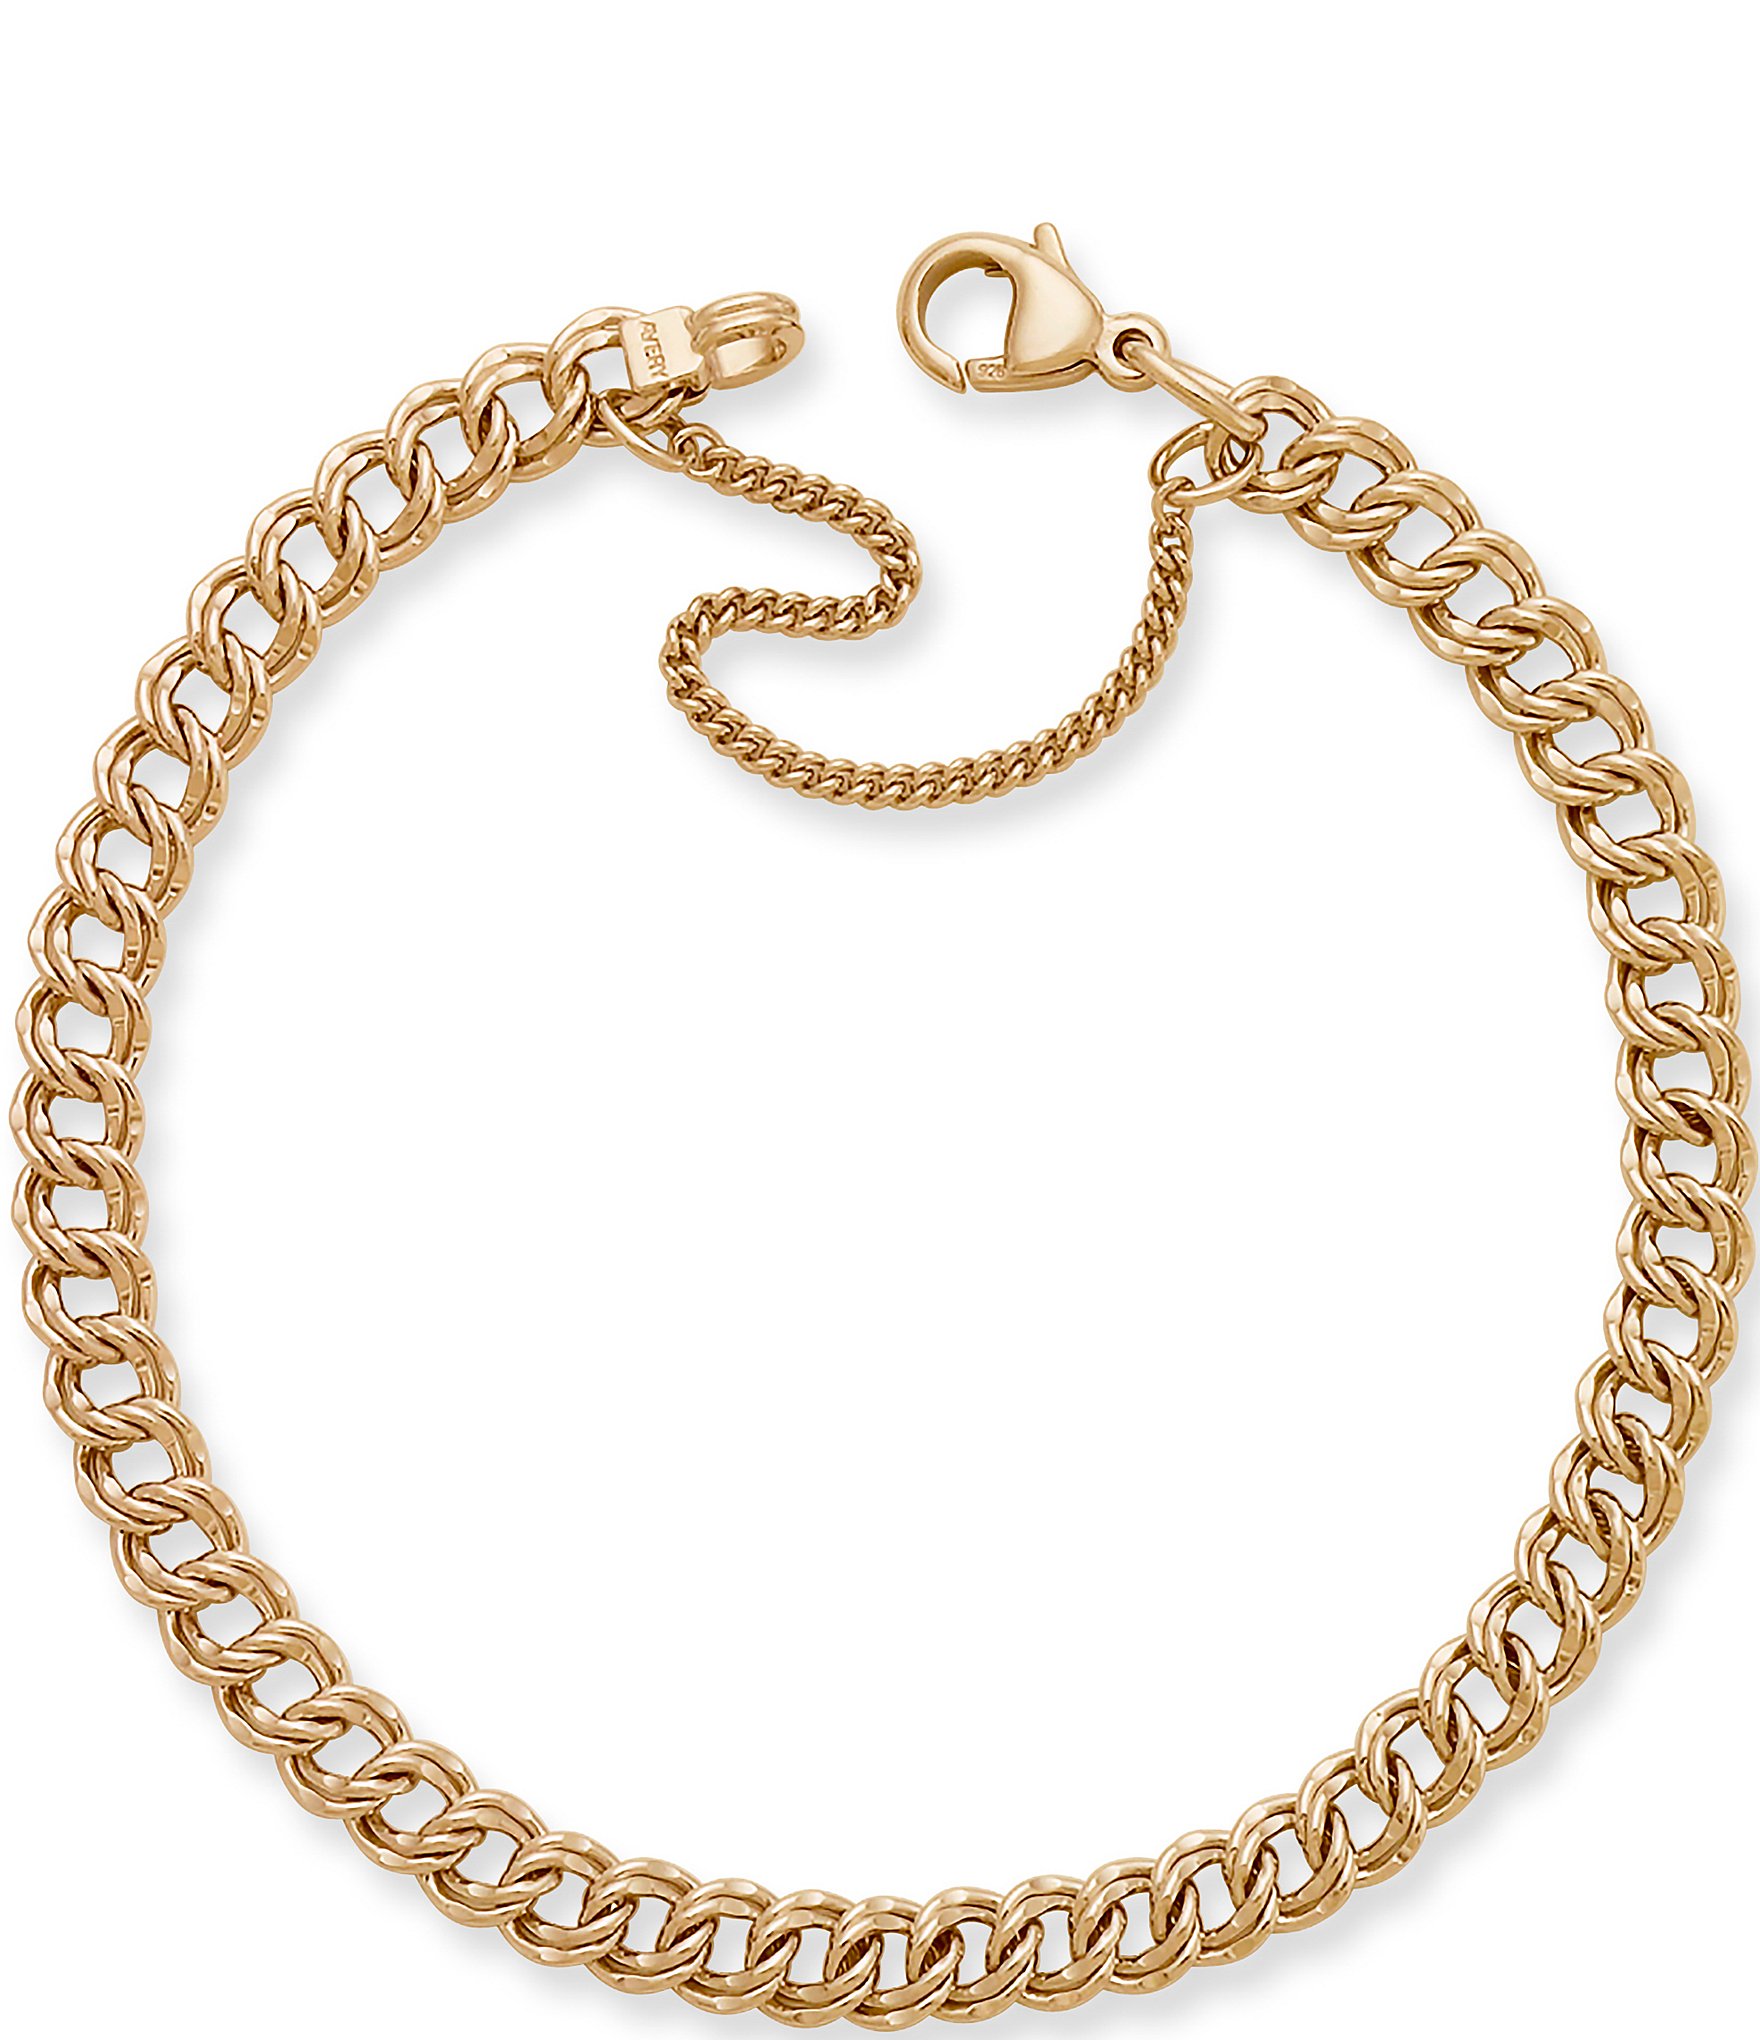 James Avery 14K Gold Star Charm Bracelet - Small